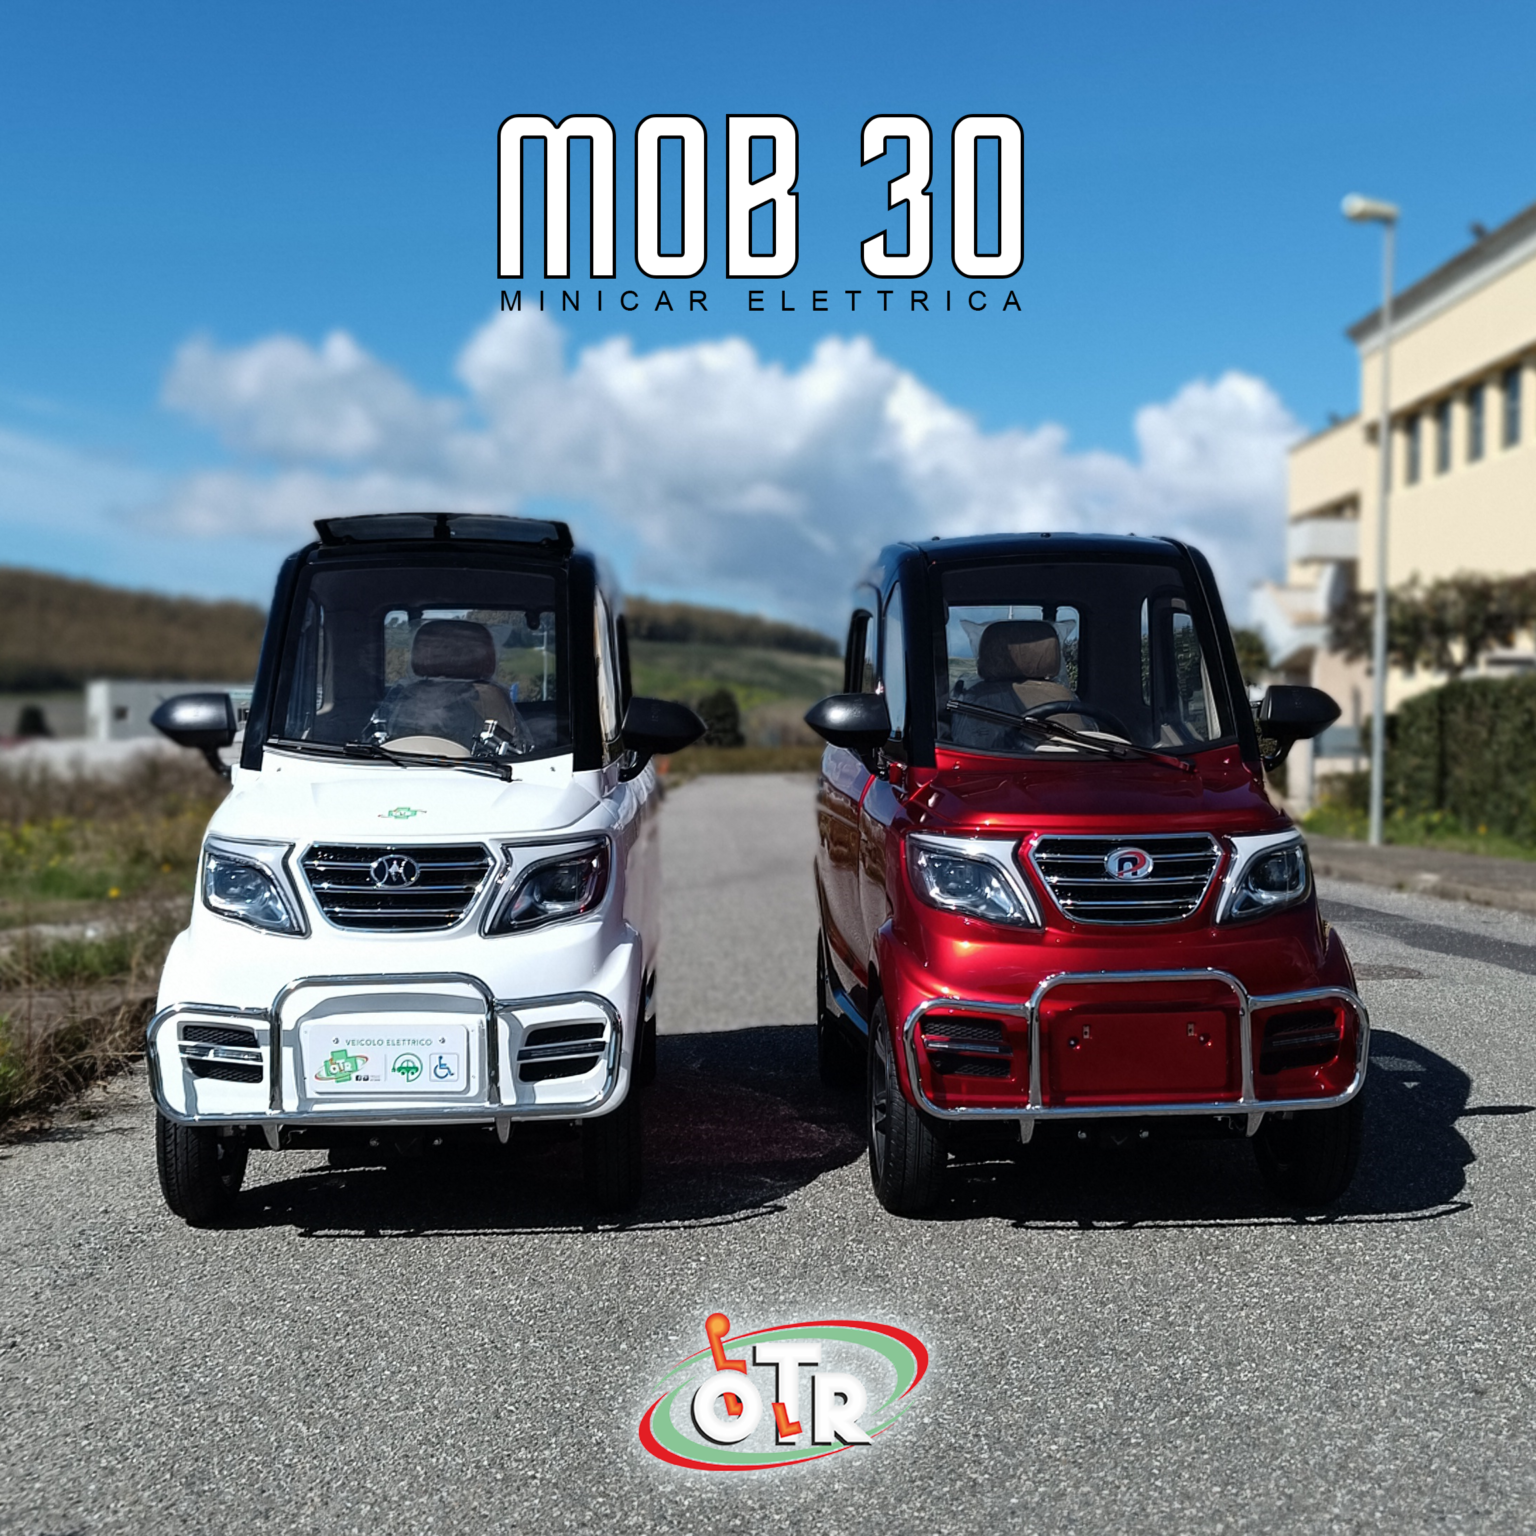 minicar-elettrica-mob30